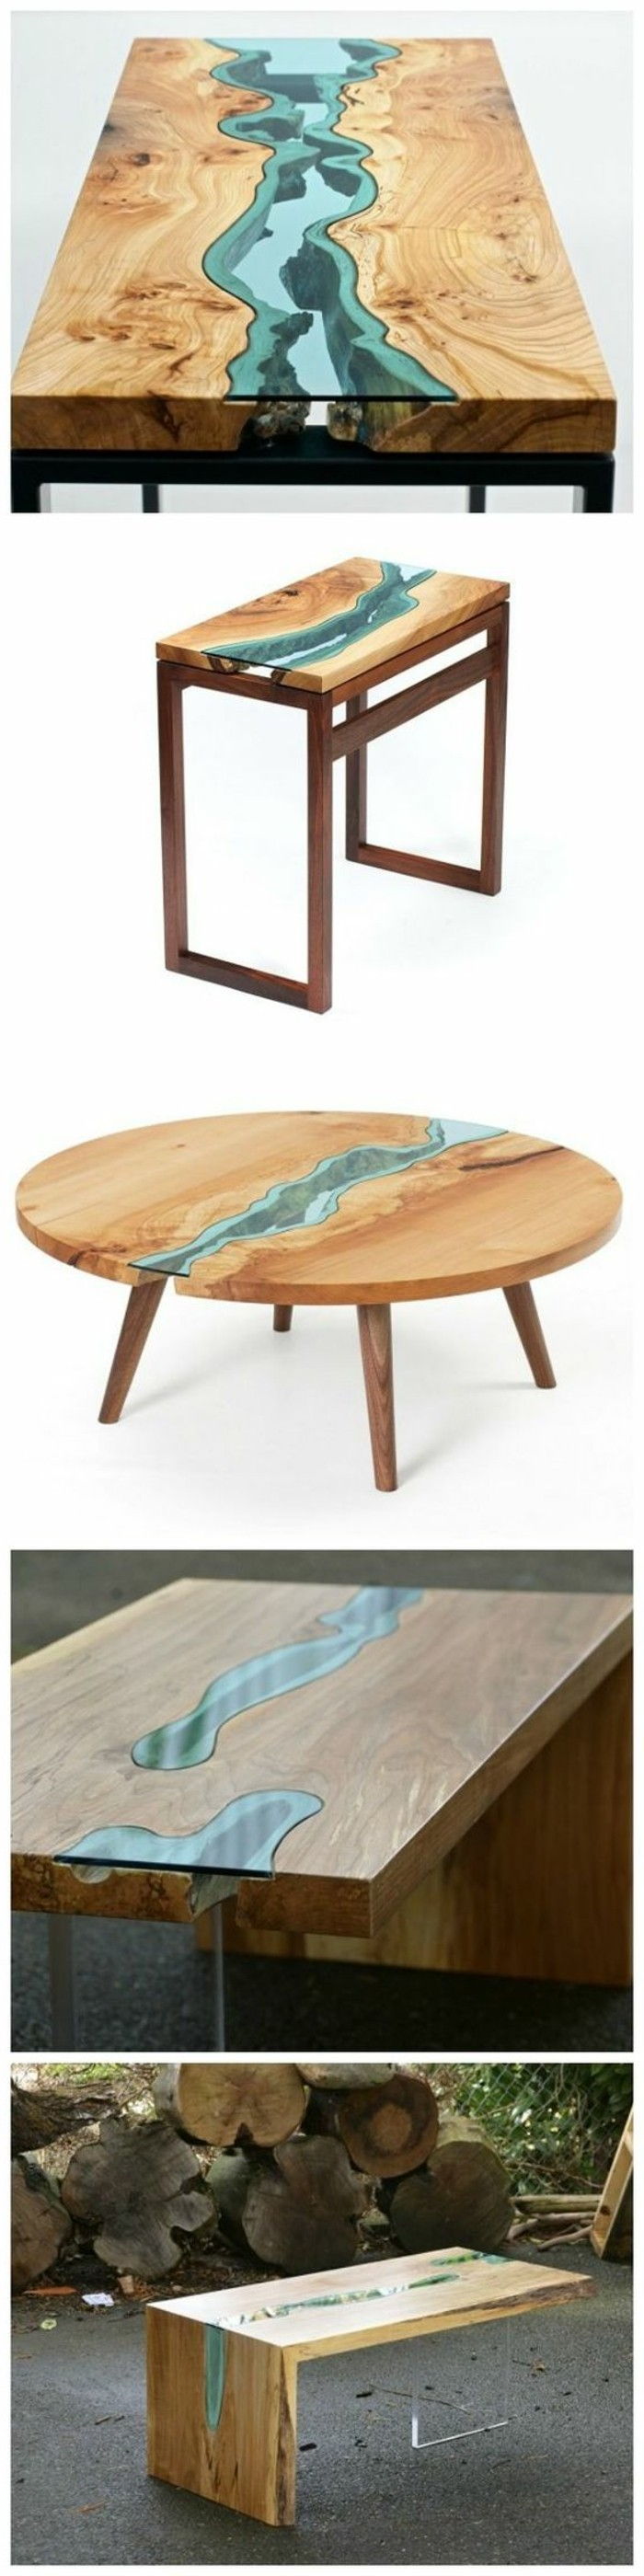 diy-Moebel-creative-wohnideen-table-of-trä och glas-eget-build